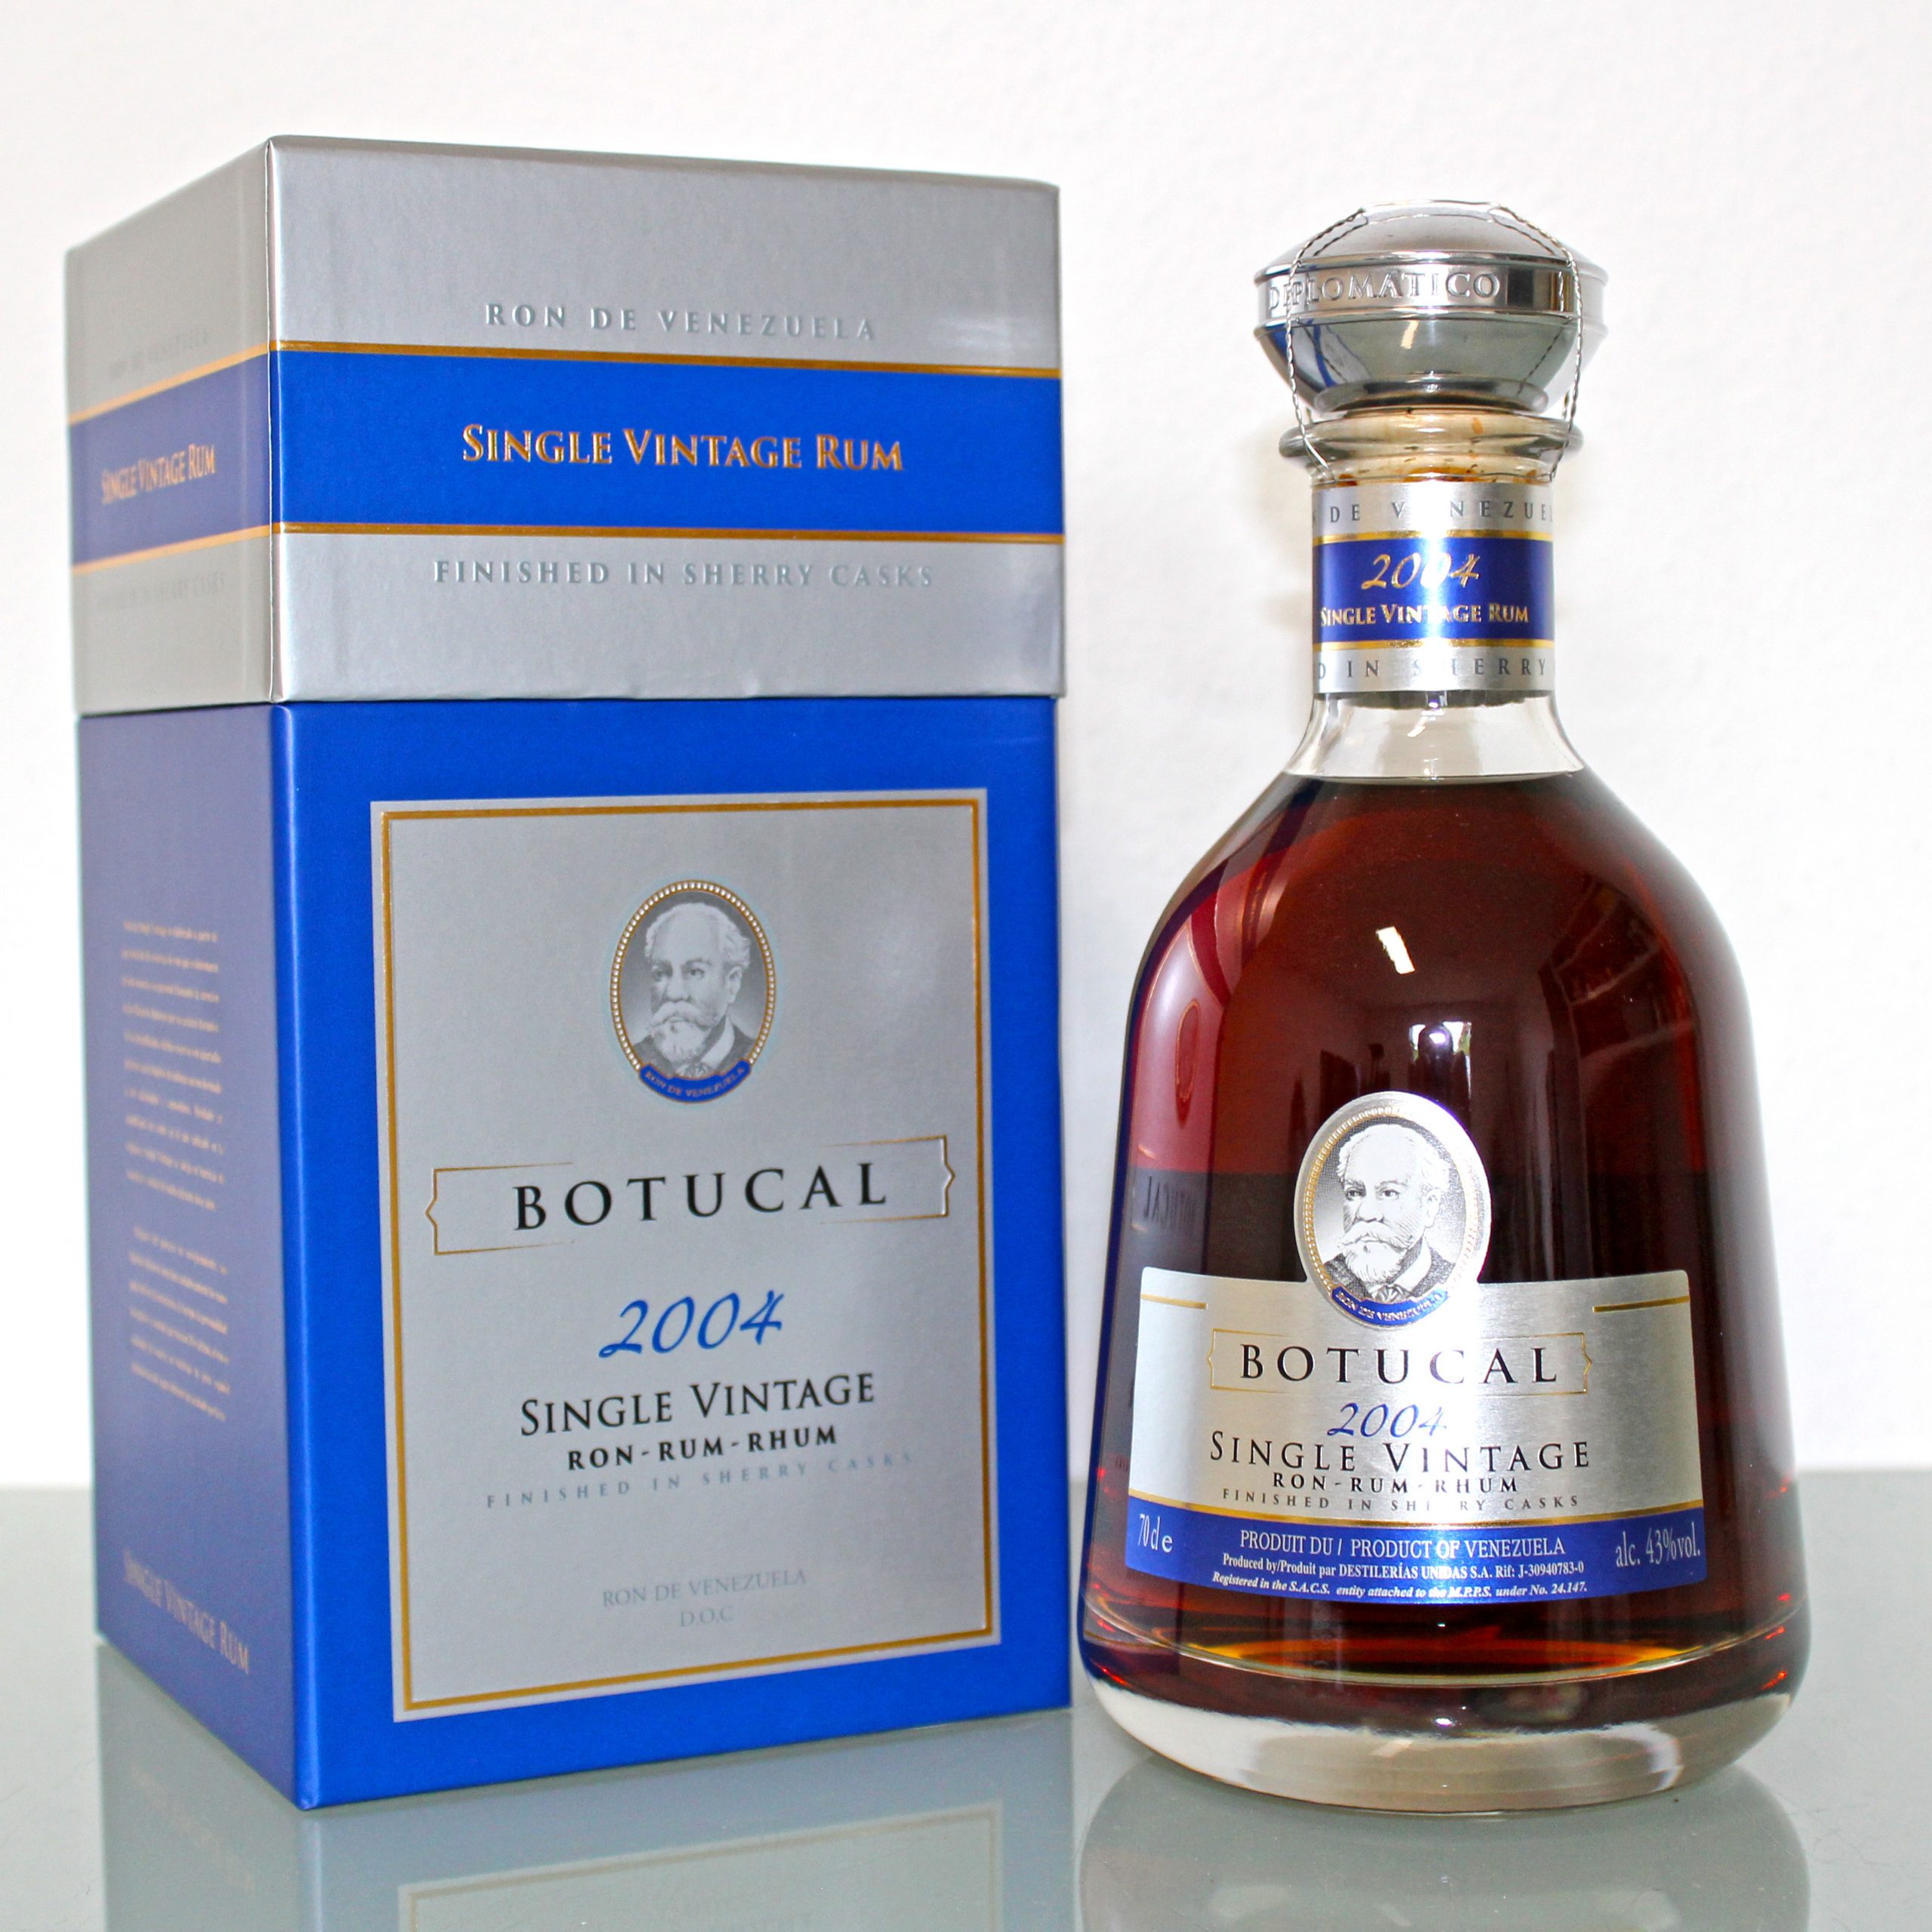 Botucal Single Vintage Rum 2004